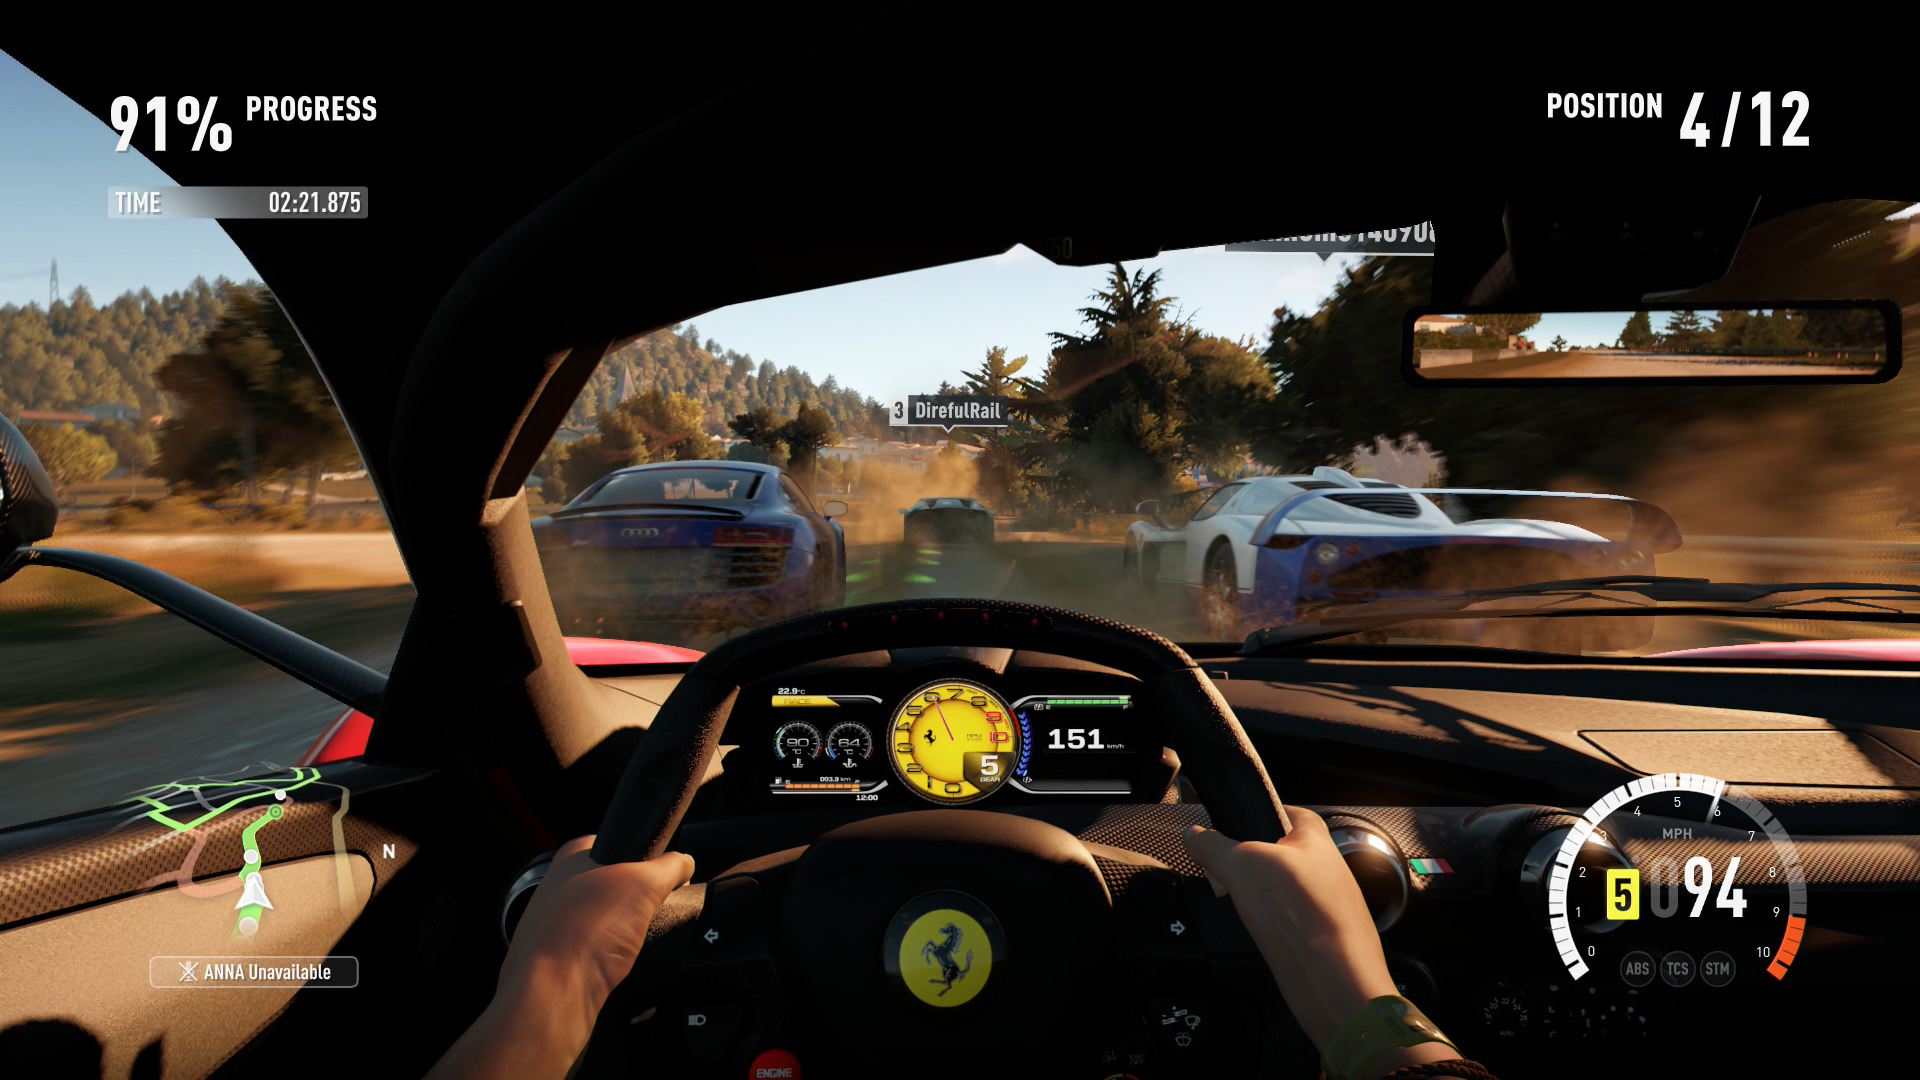 Porsche comes to Forza Horizon, kicking off new partnership with Microsoft  - Polygon